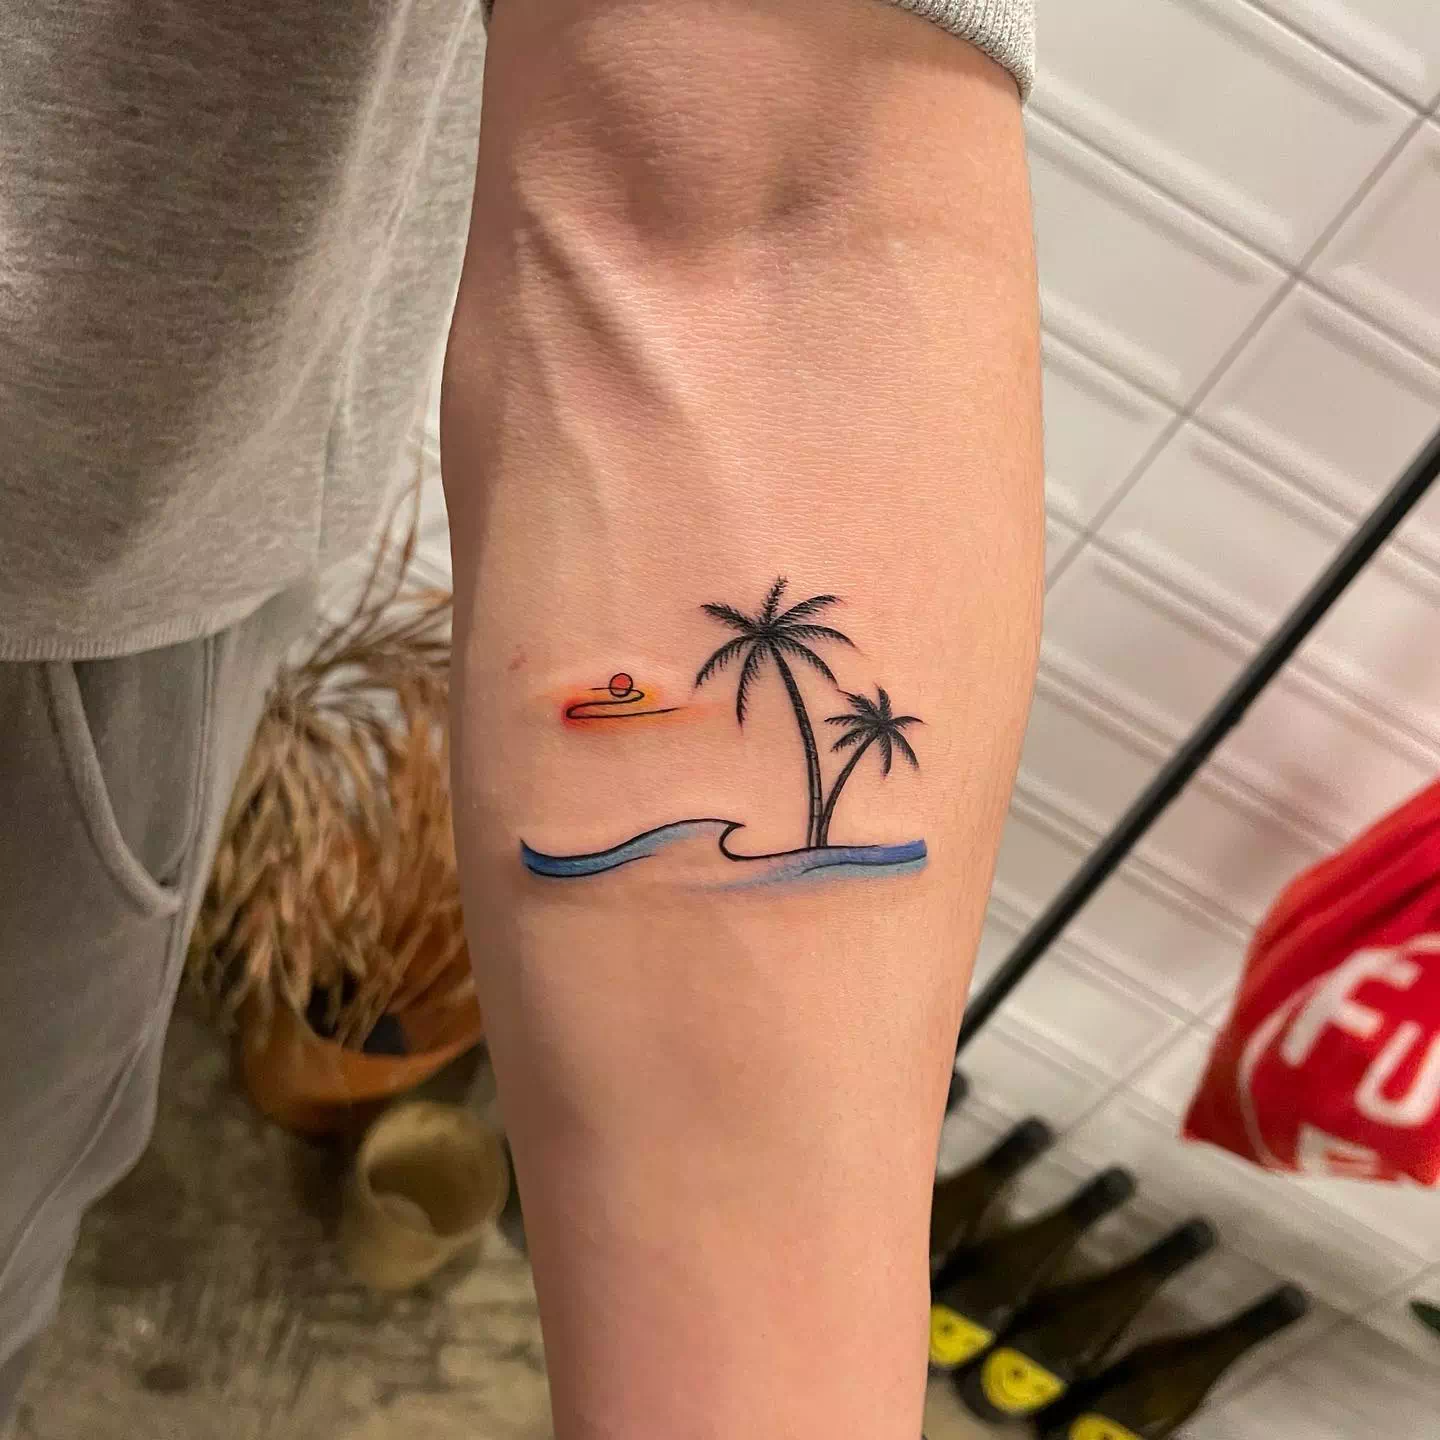 Tatuaje de una palmera en el antebrazo 4